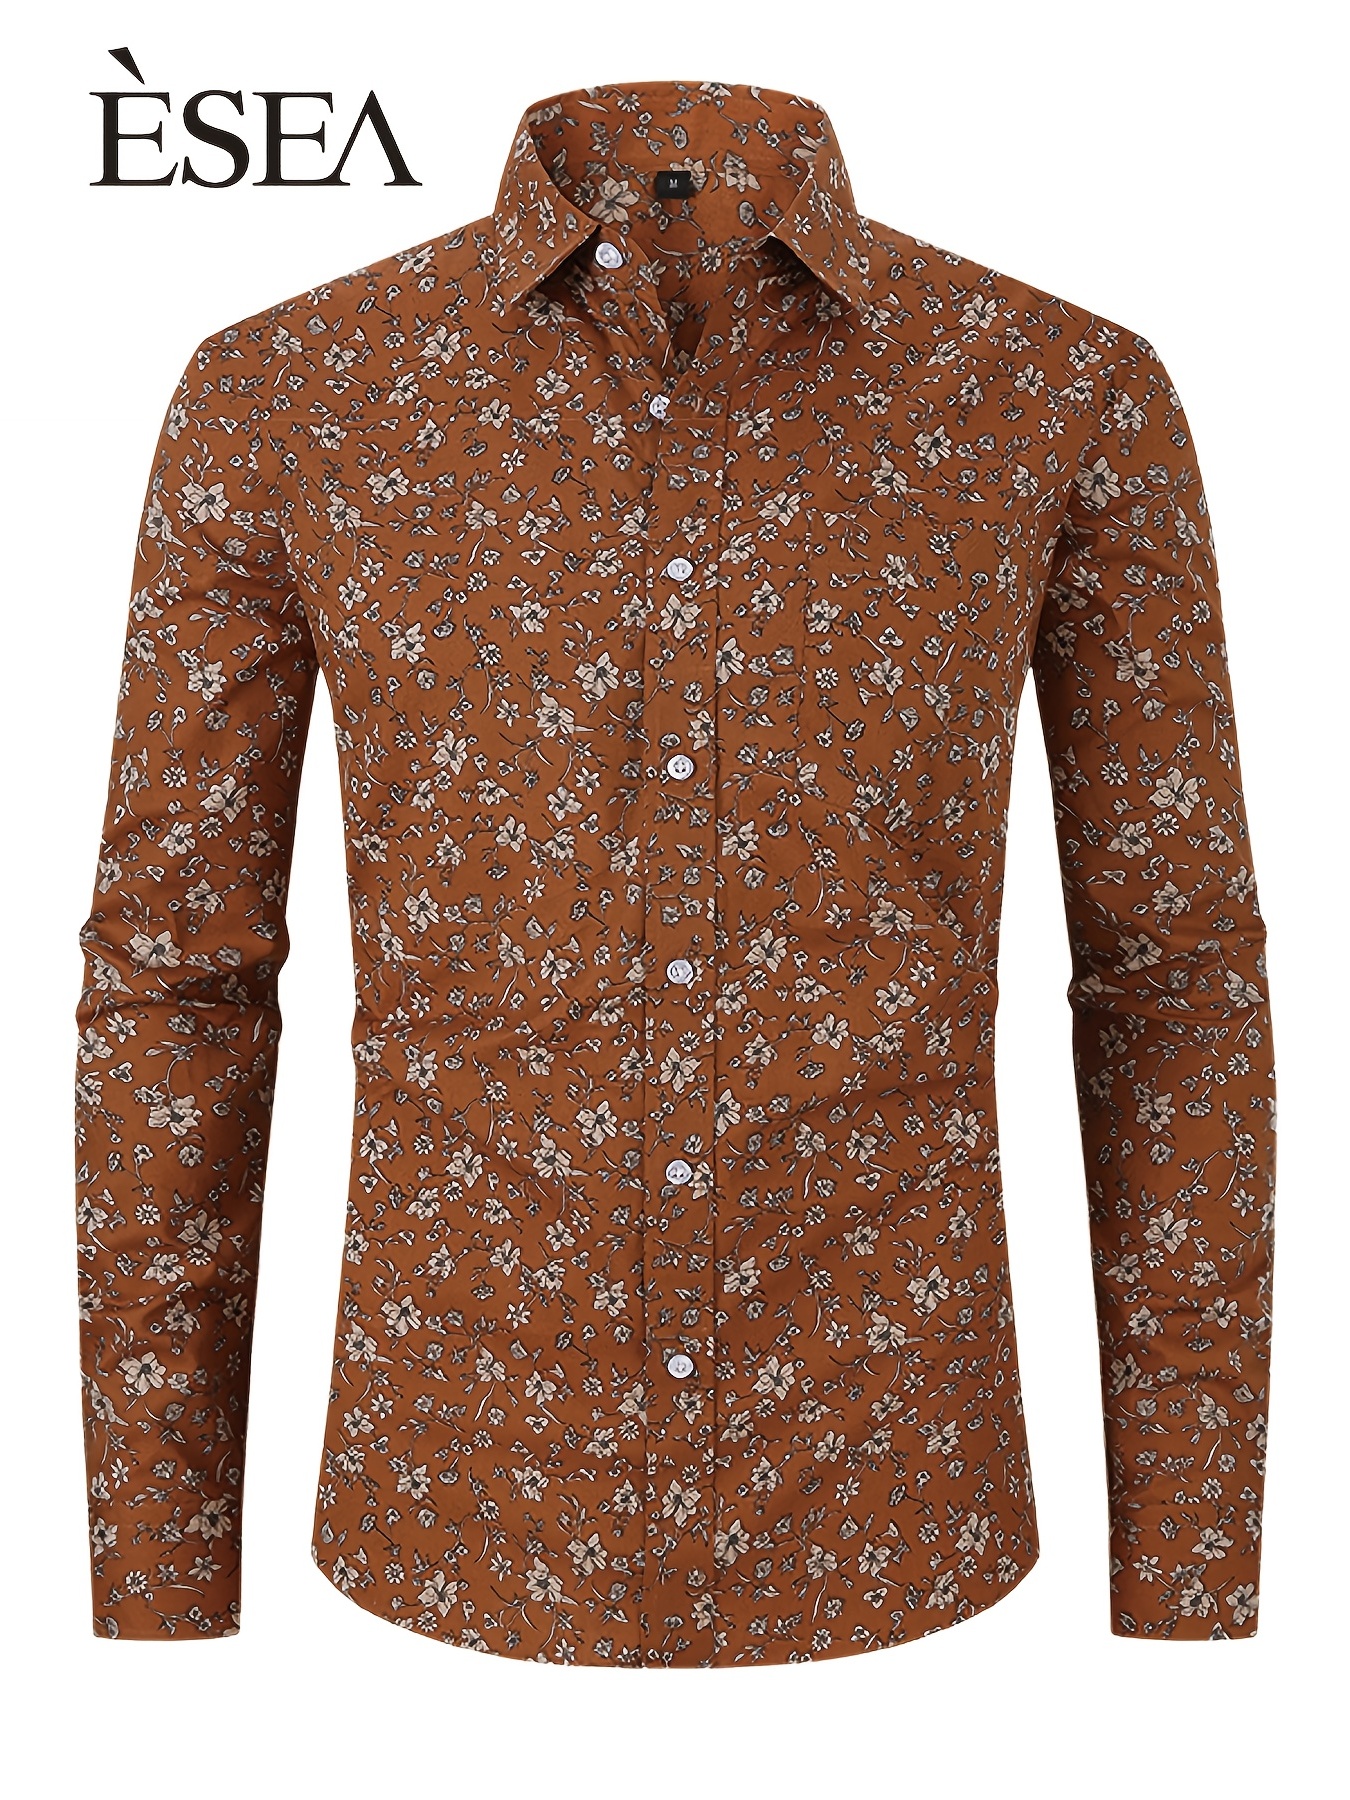 Flower print brown men's shirt